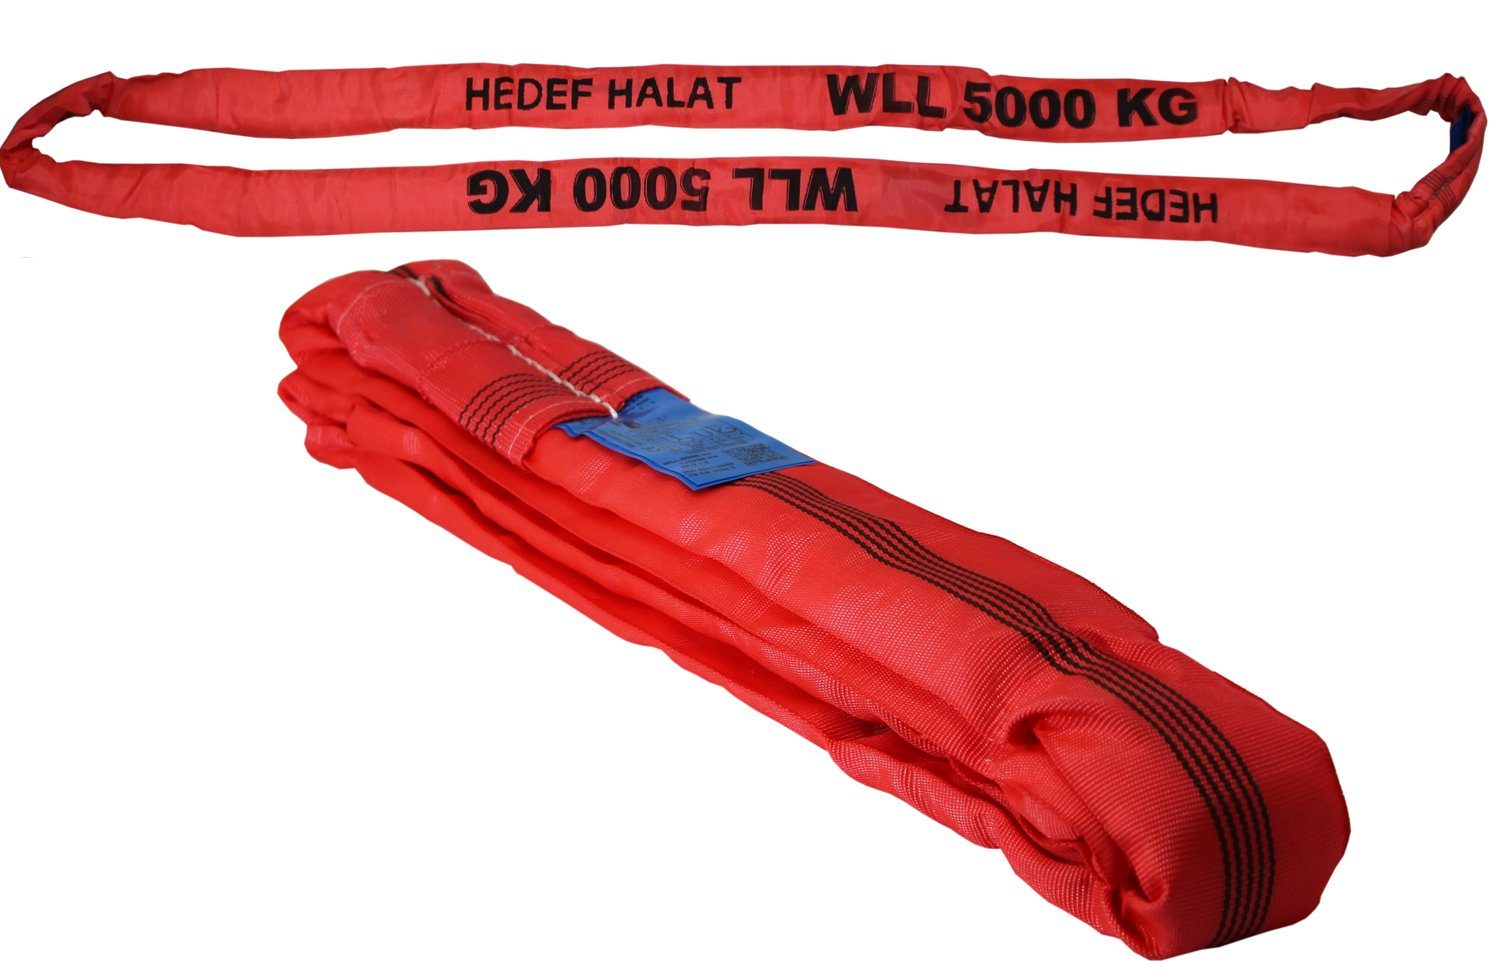 HEDEF HALAT Rundschlinge mit Einfachmantel 5 Tonnen 4 Meter SF: 7/1 DIN EN 1492-2 Hebeband, Rundschlingen Bandschlinge Hebegurt 4 m (umfang 8 m)